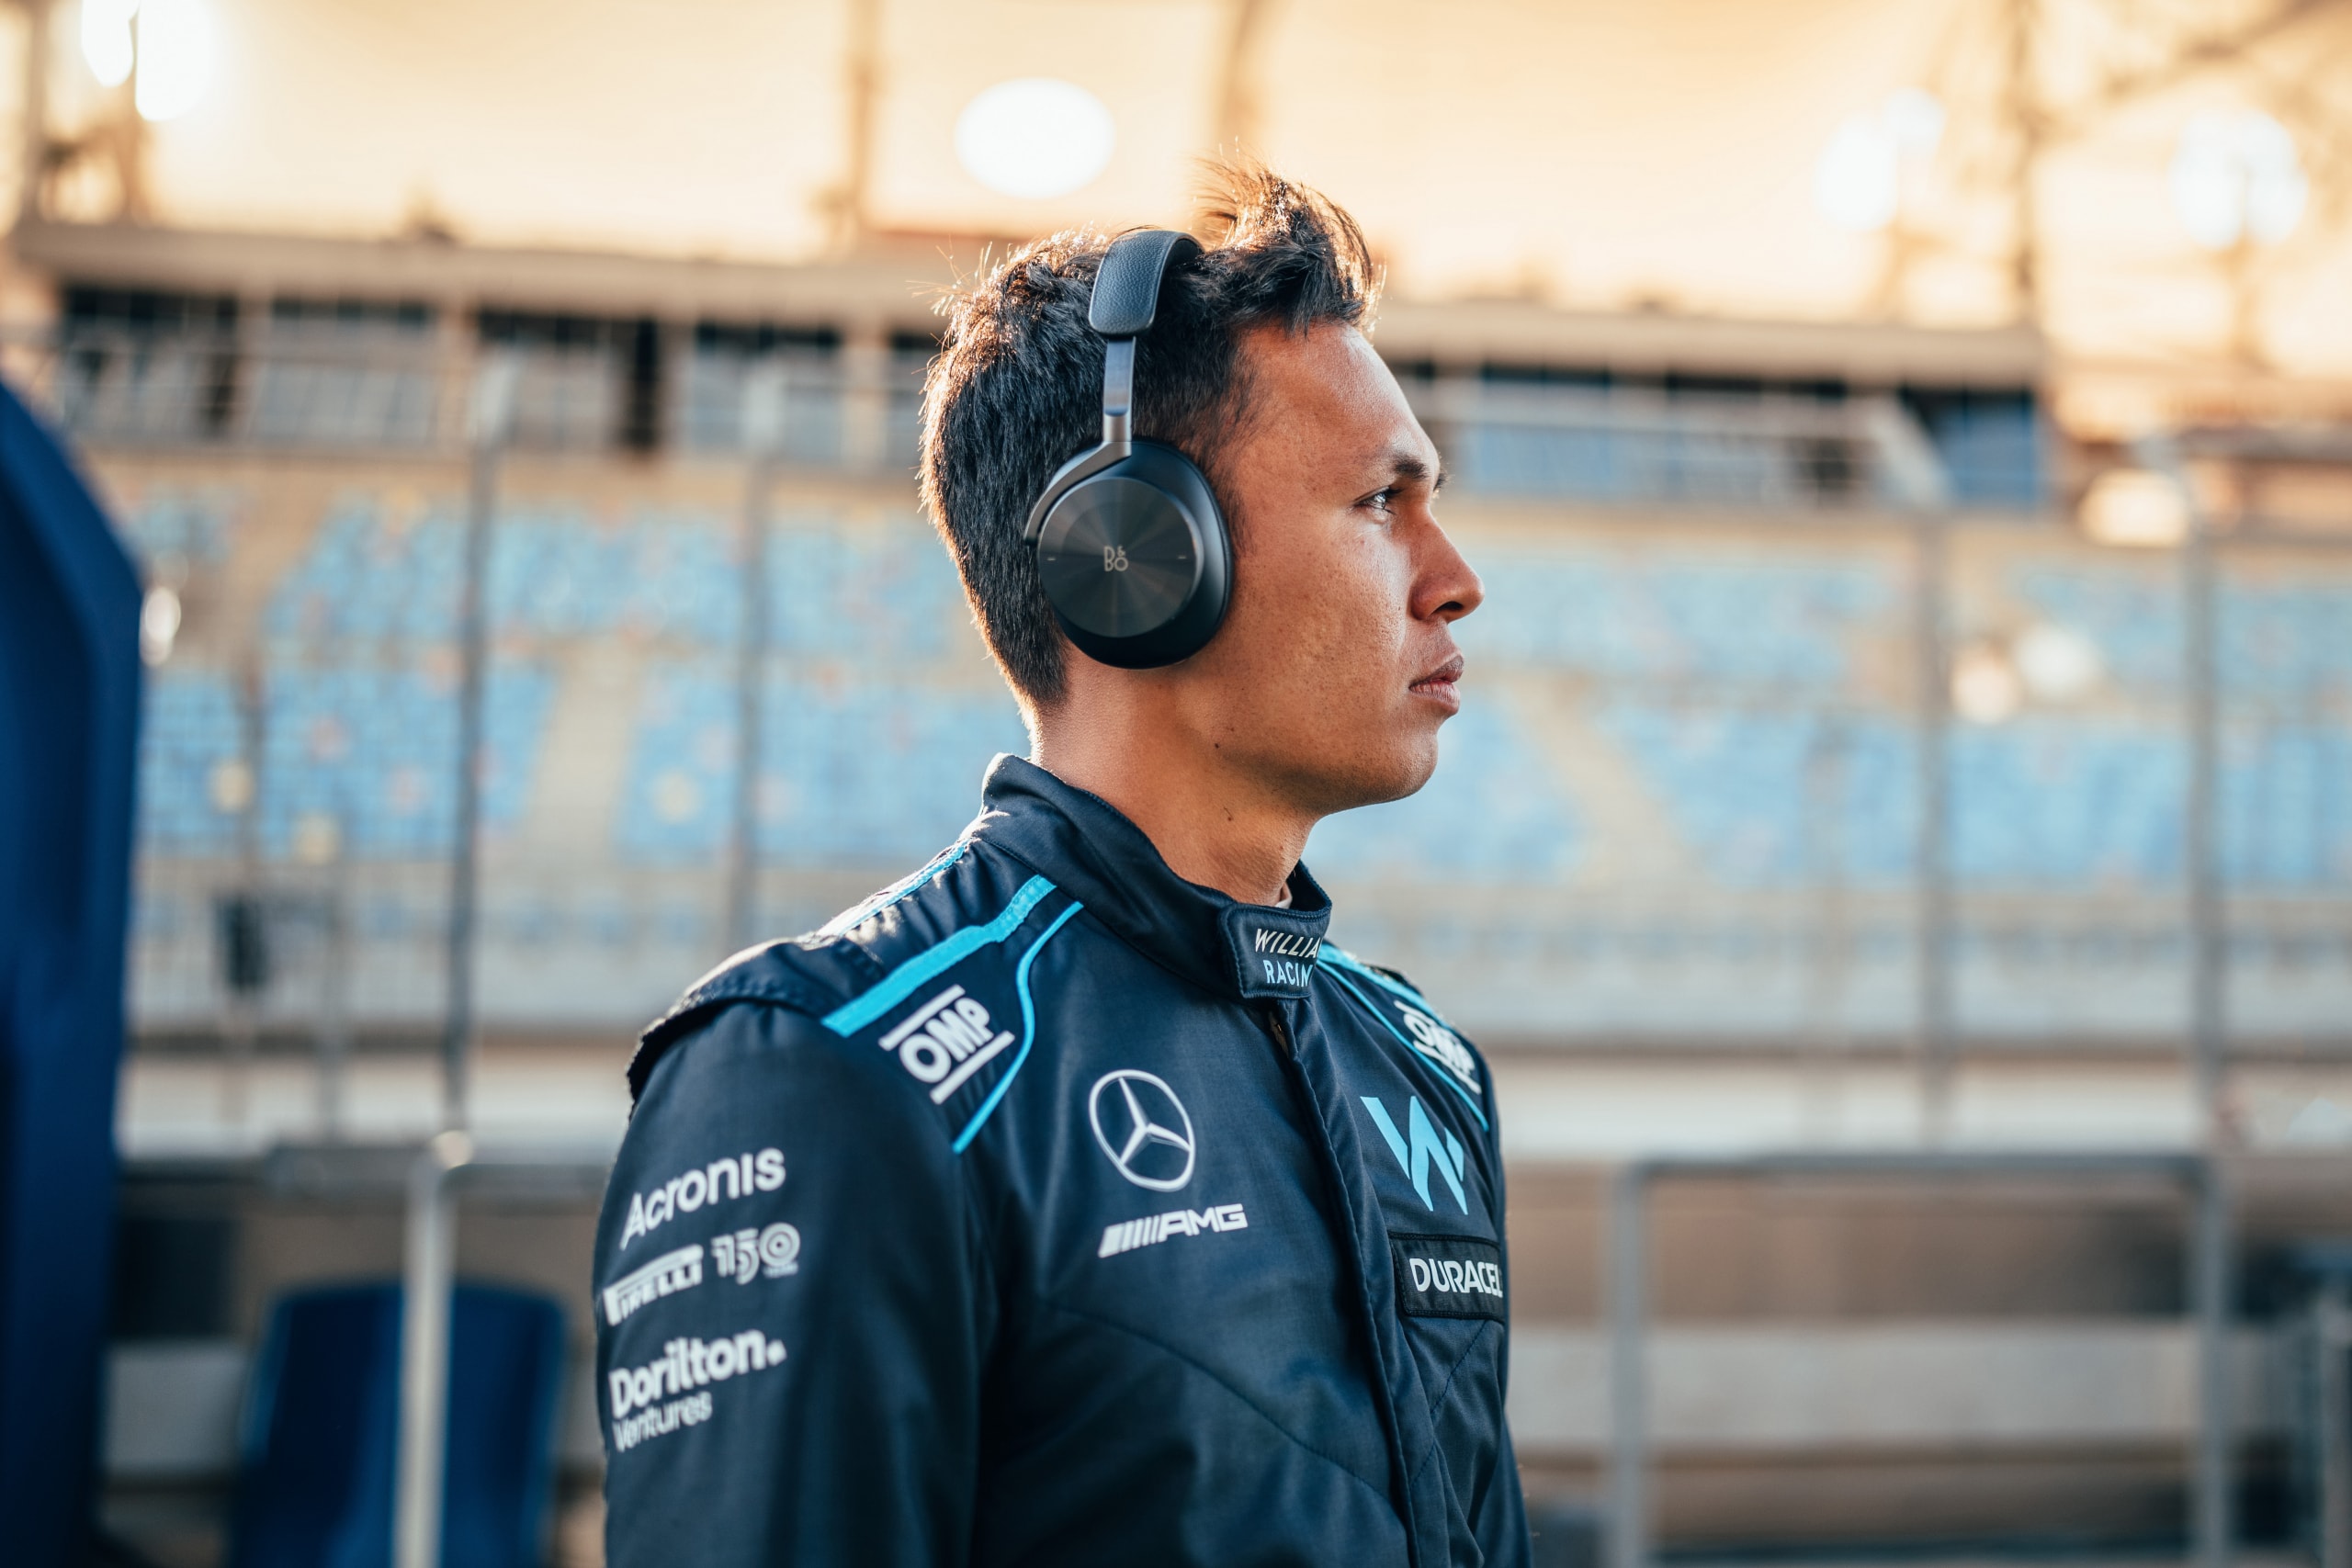 Bang & Olufsen 宣布与 F1 Williams Racing 车队达成合作关系